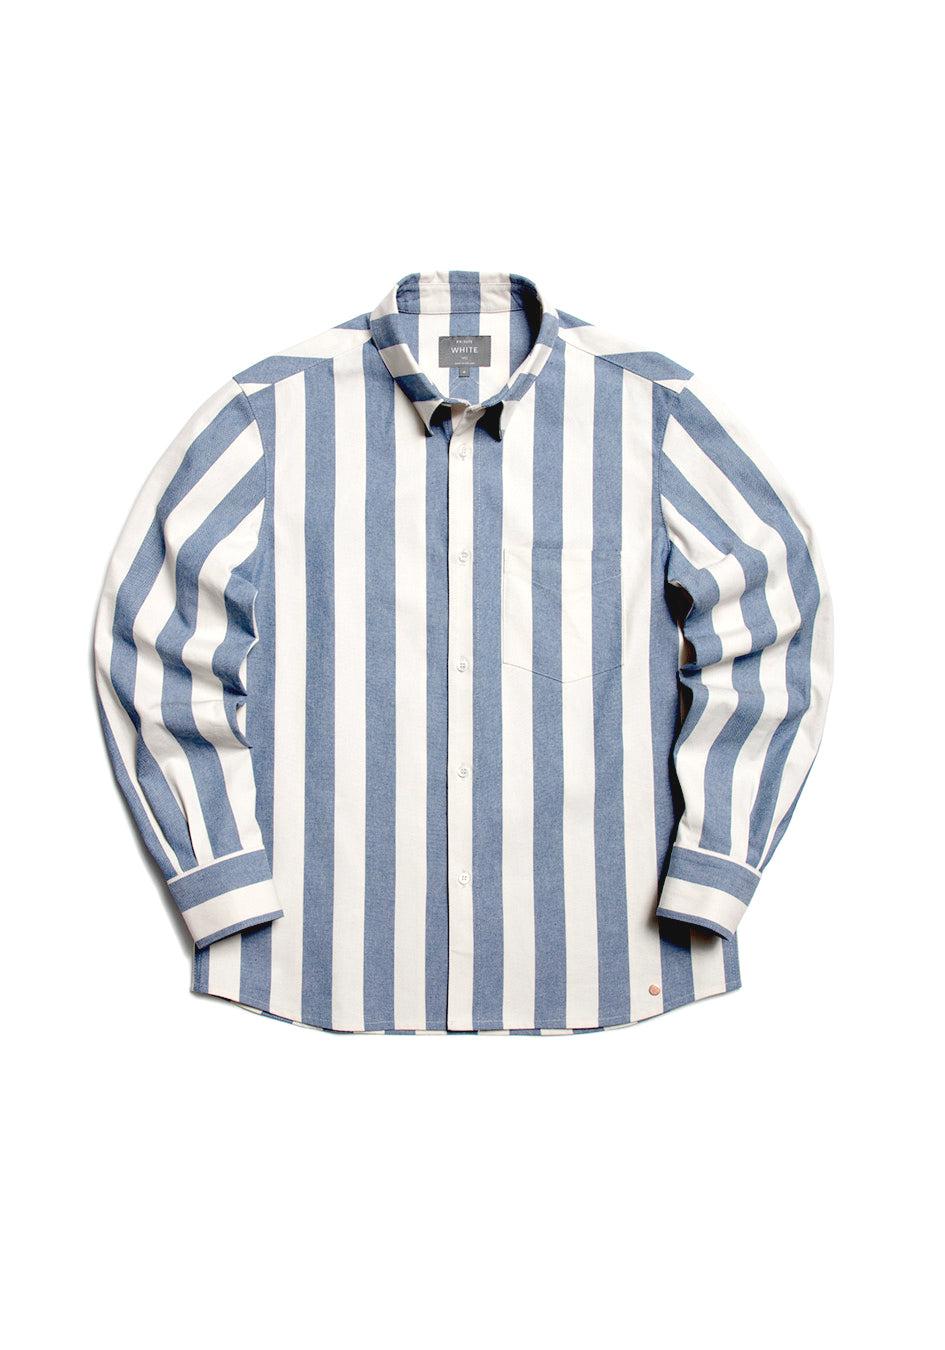 The Striped Summer BD Shirt